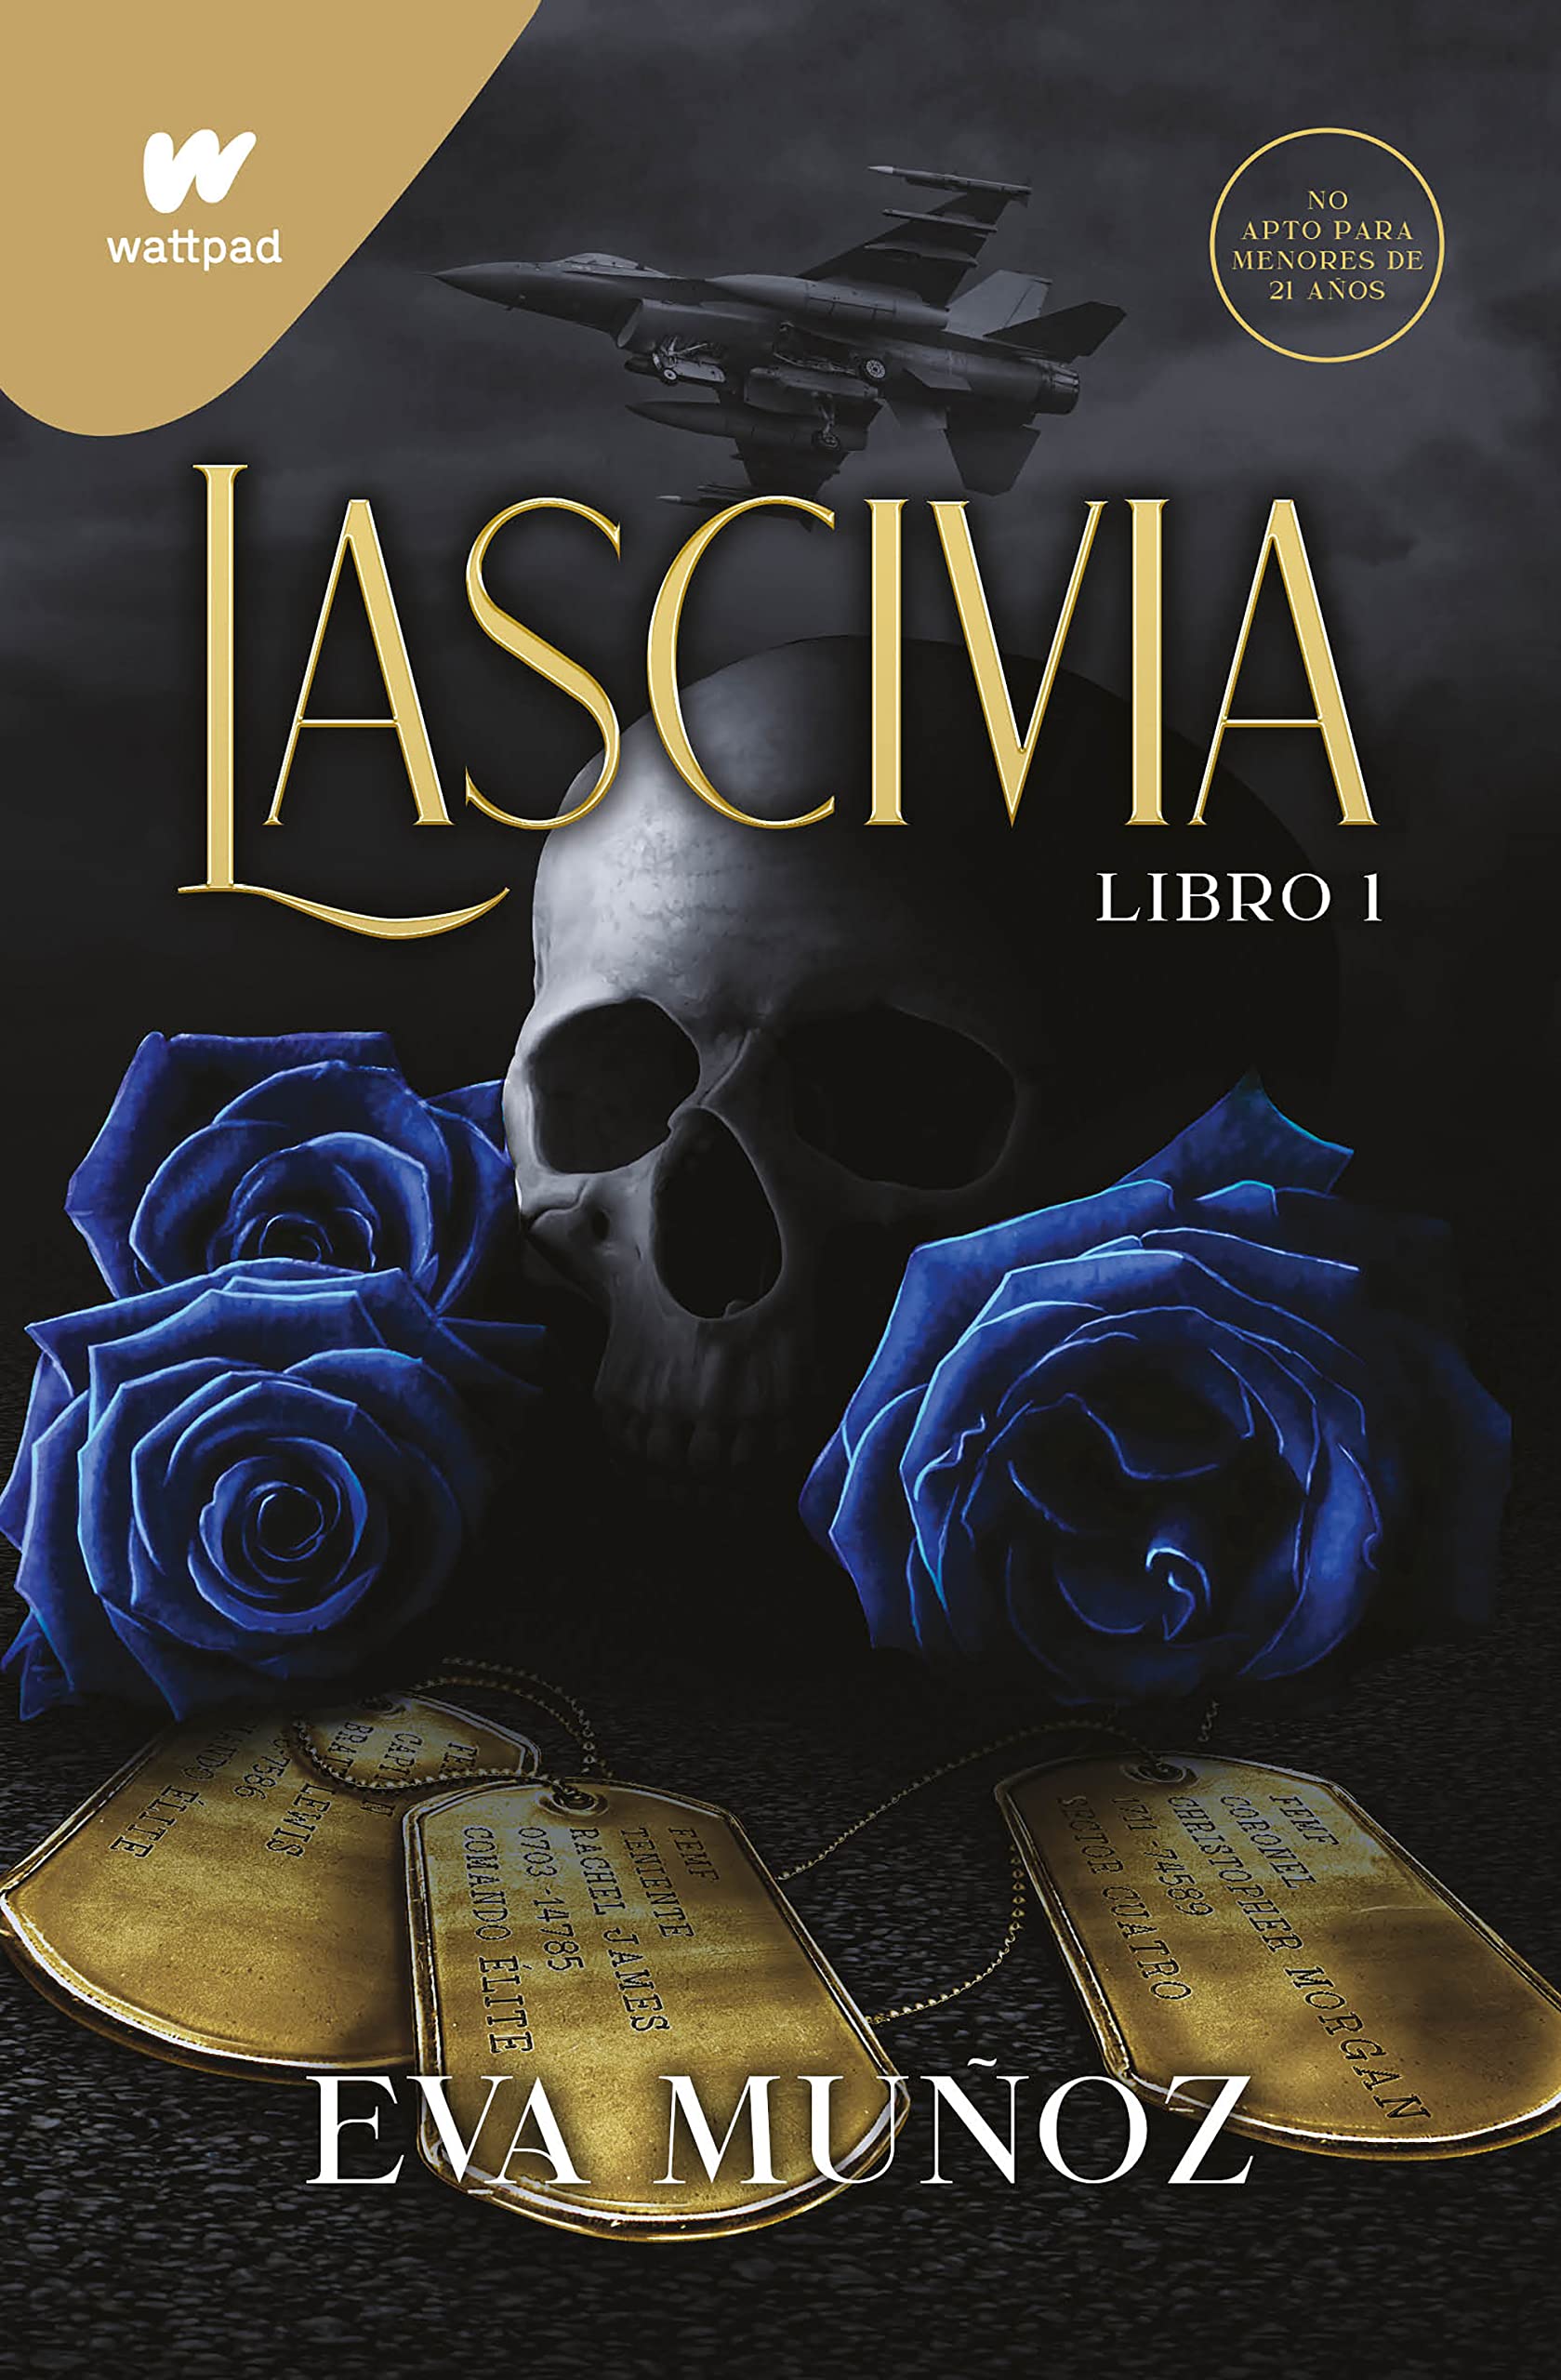 Lascivia. Libro 1 / Lascivious Book 1 (Wattpad. Pecados Placenteros) (Spanish Edition)